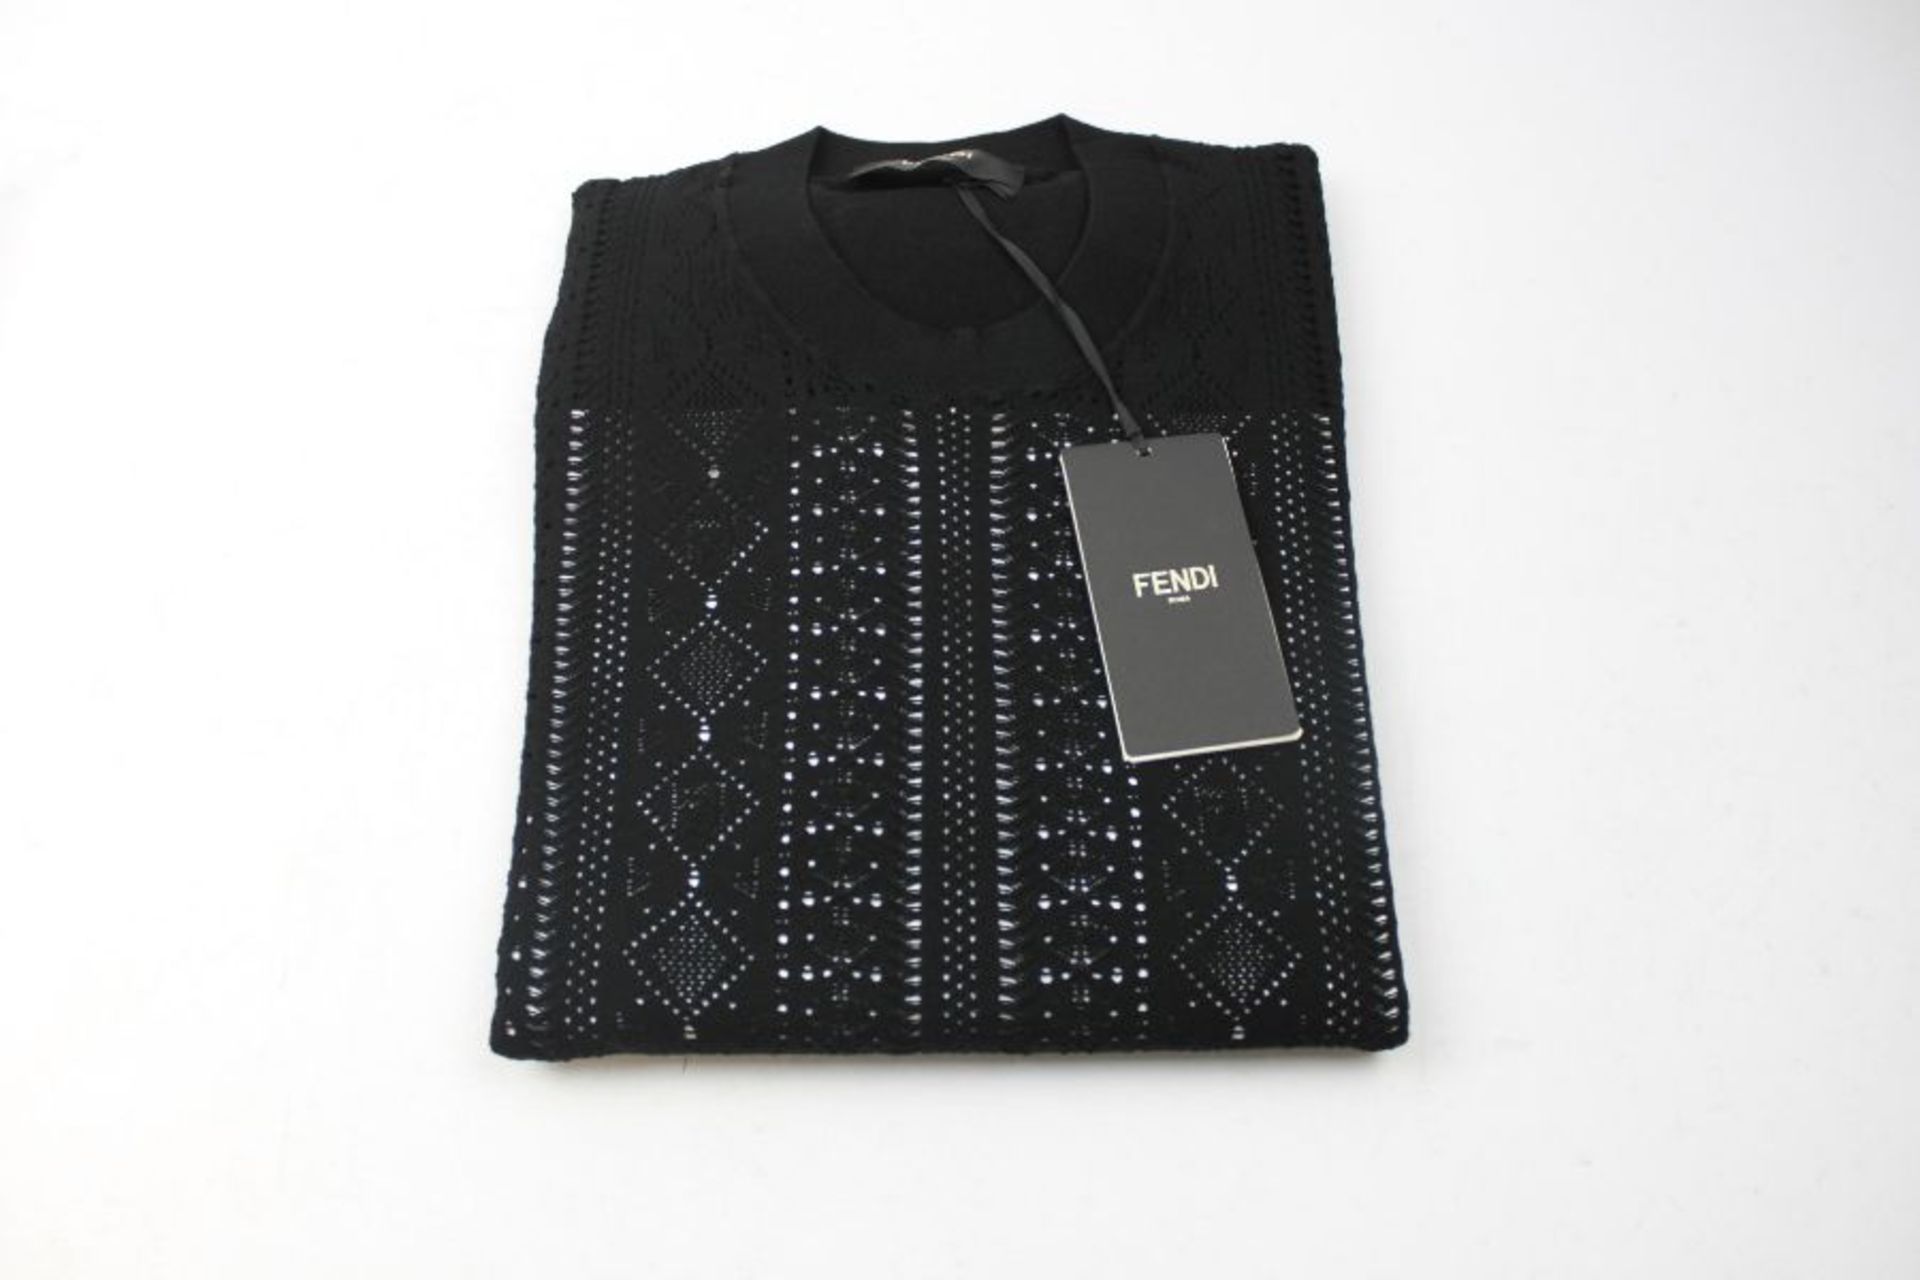 Fendi Men's Ff-flocked Cotton-blend Jersey Sweatshirt, Black, Size L - Image 2 of 2